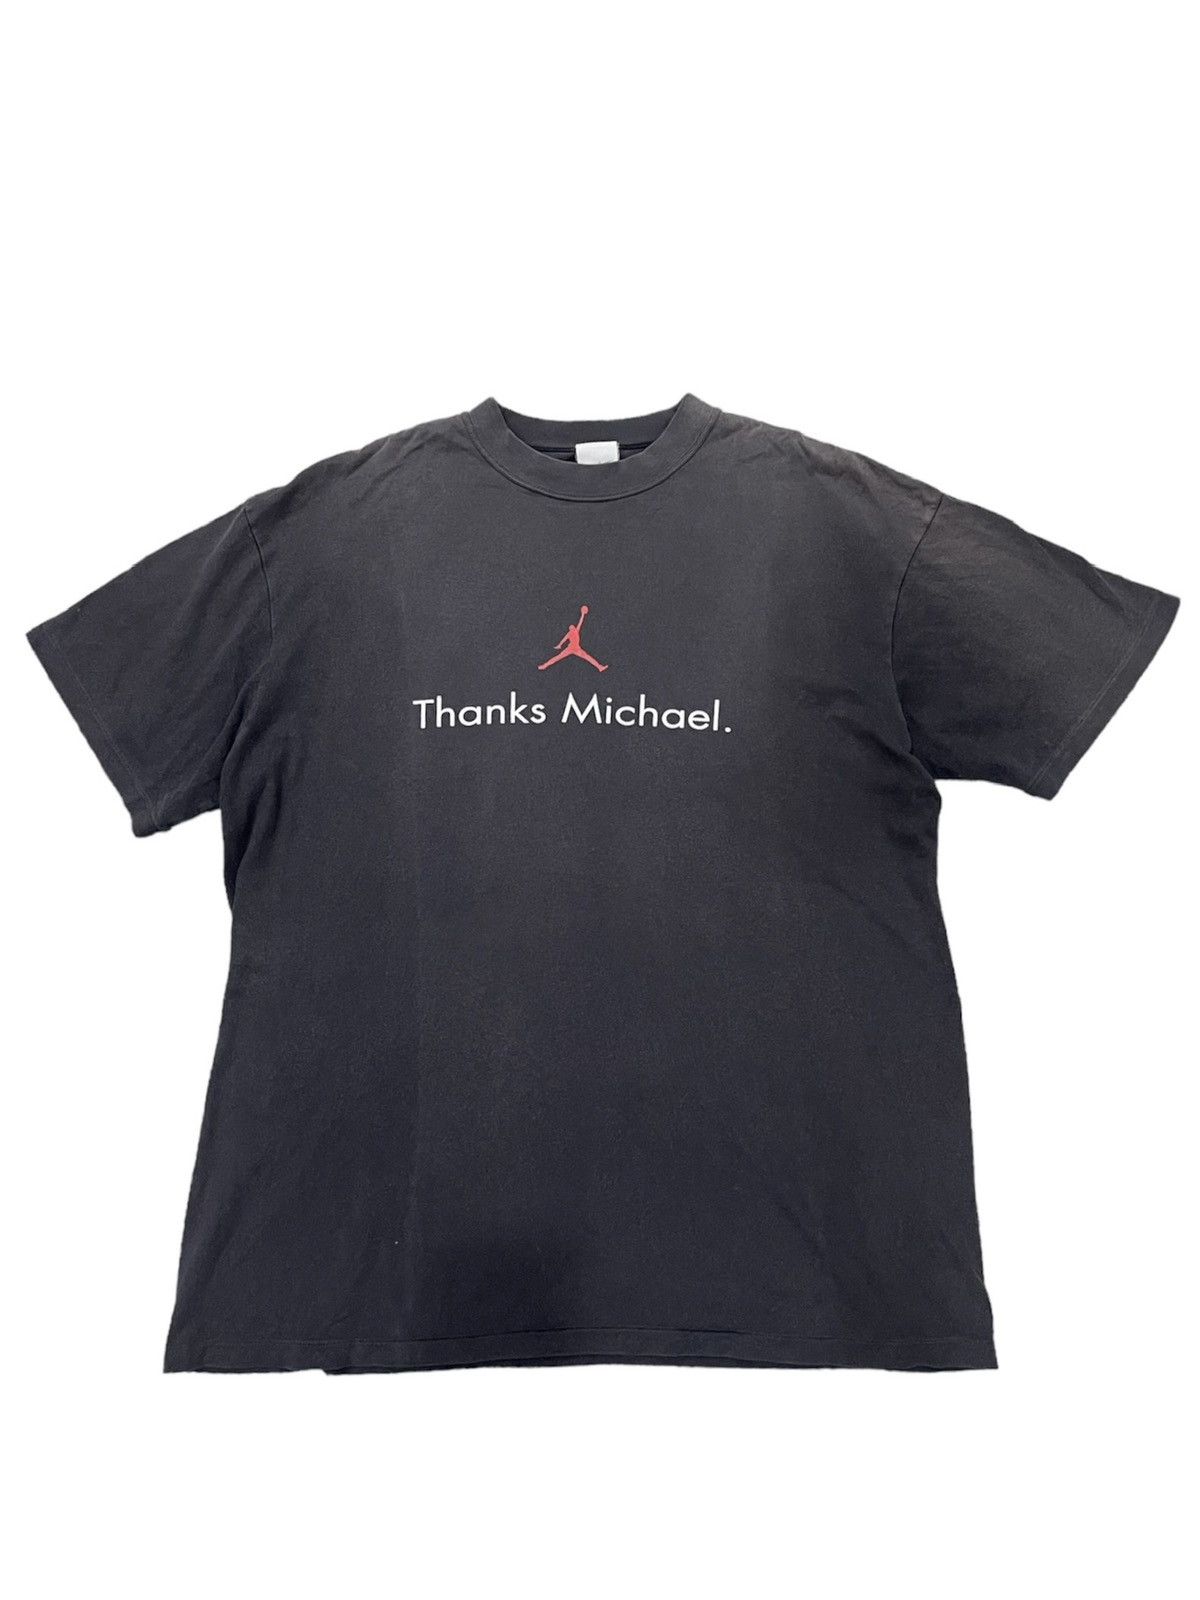 Vintage 90s Nike Thanks Micheal MVP Jordan T-Shirt - 1